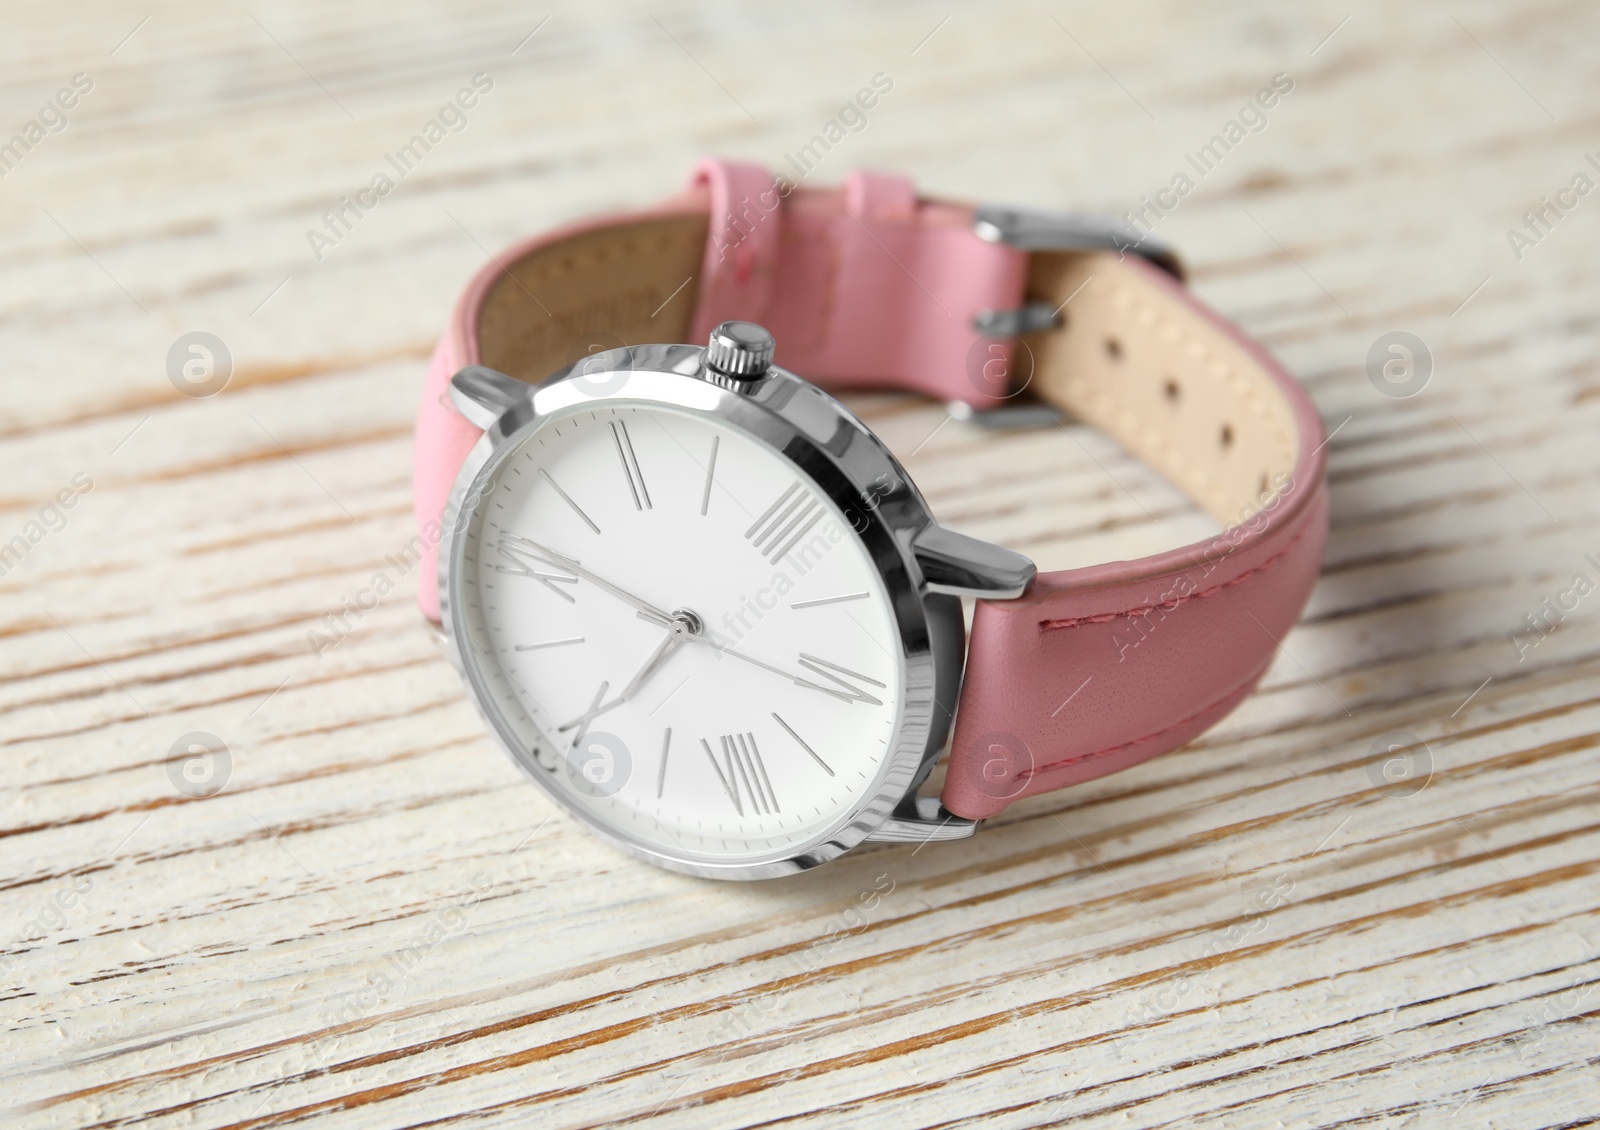 Photo of Stylish wrist watch on wooden table. Fashion accessory